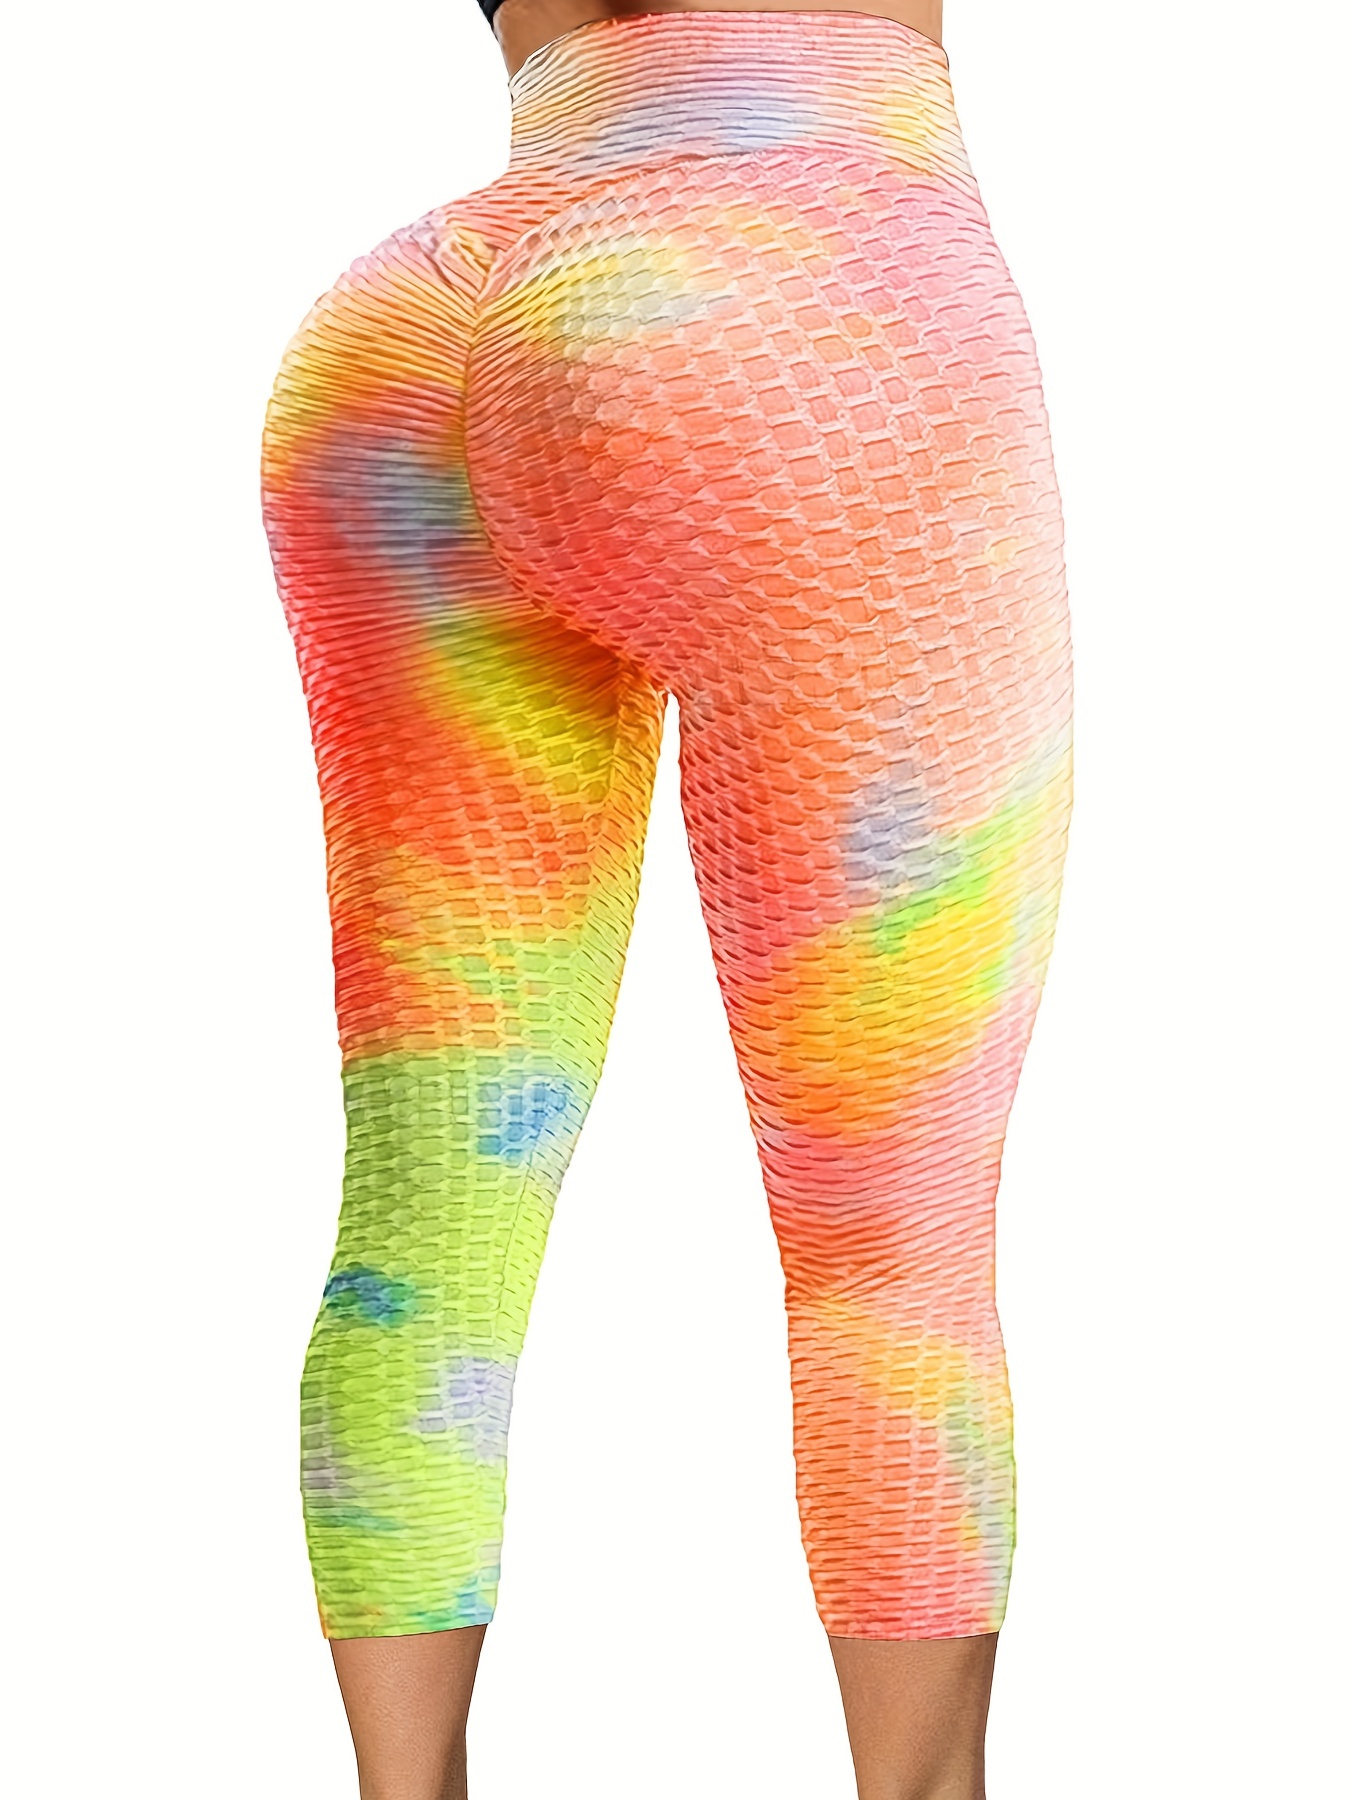 Leggings for Women Pants Honeycomb Textured Bum Booty Boosting